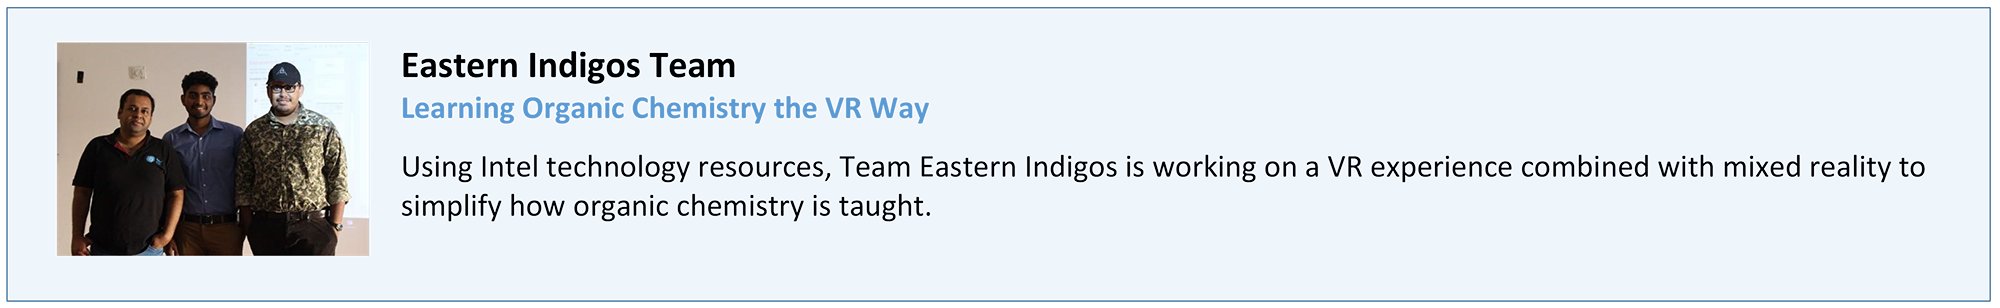 Team 1 Eastern Indigos